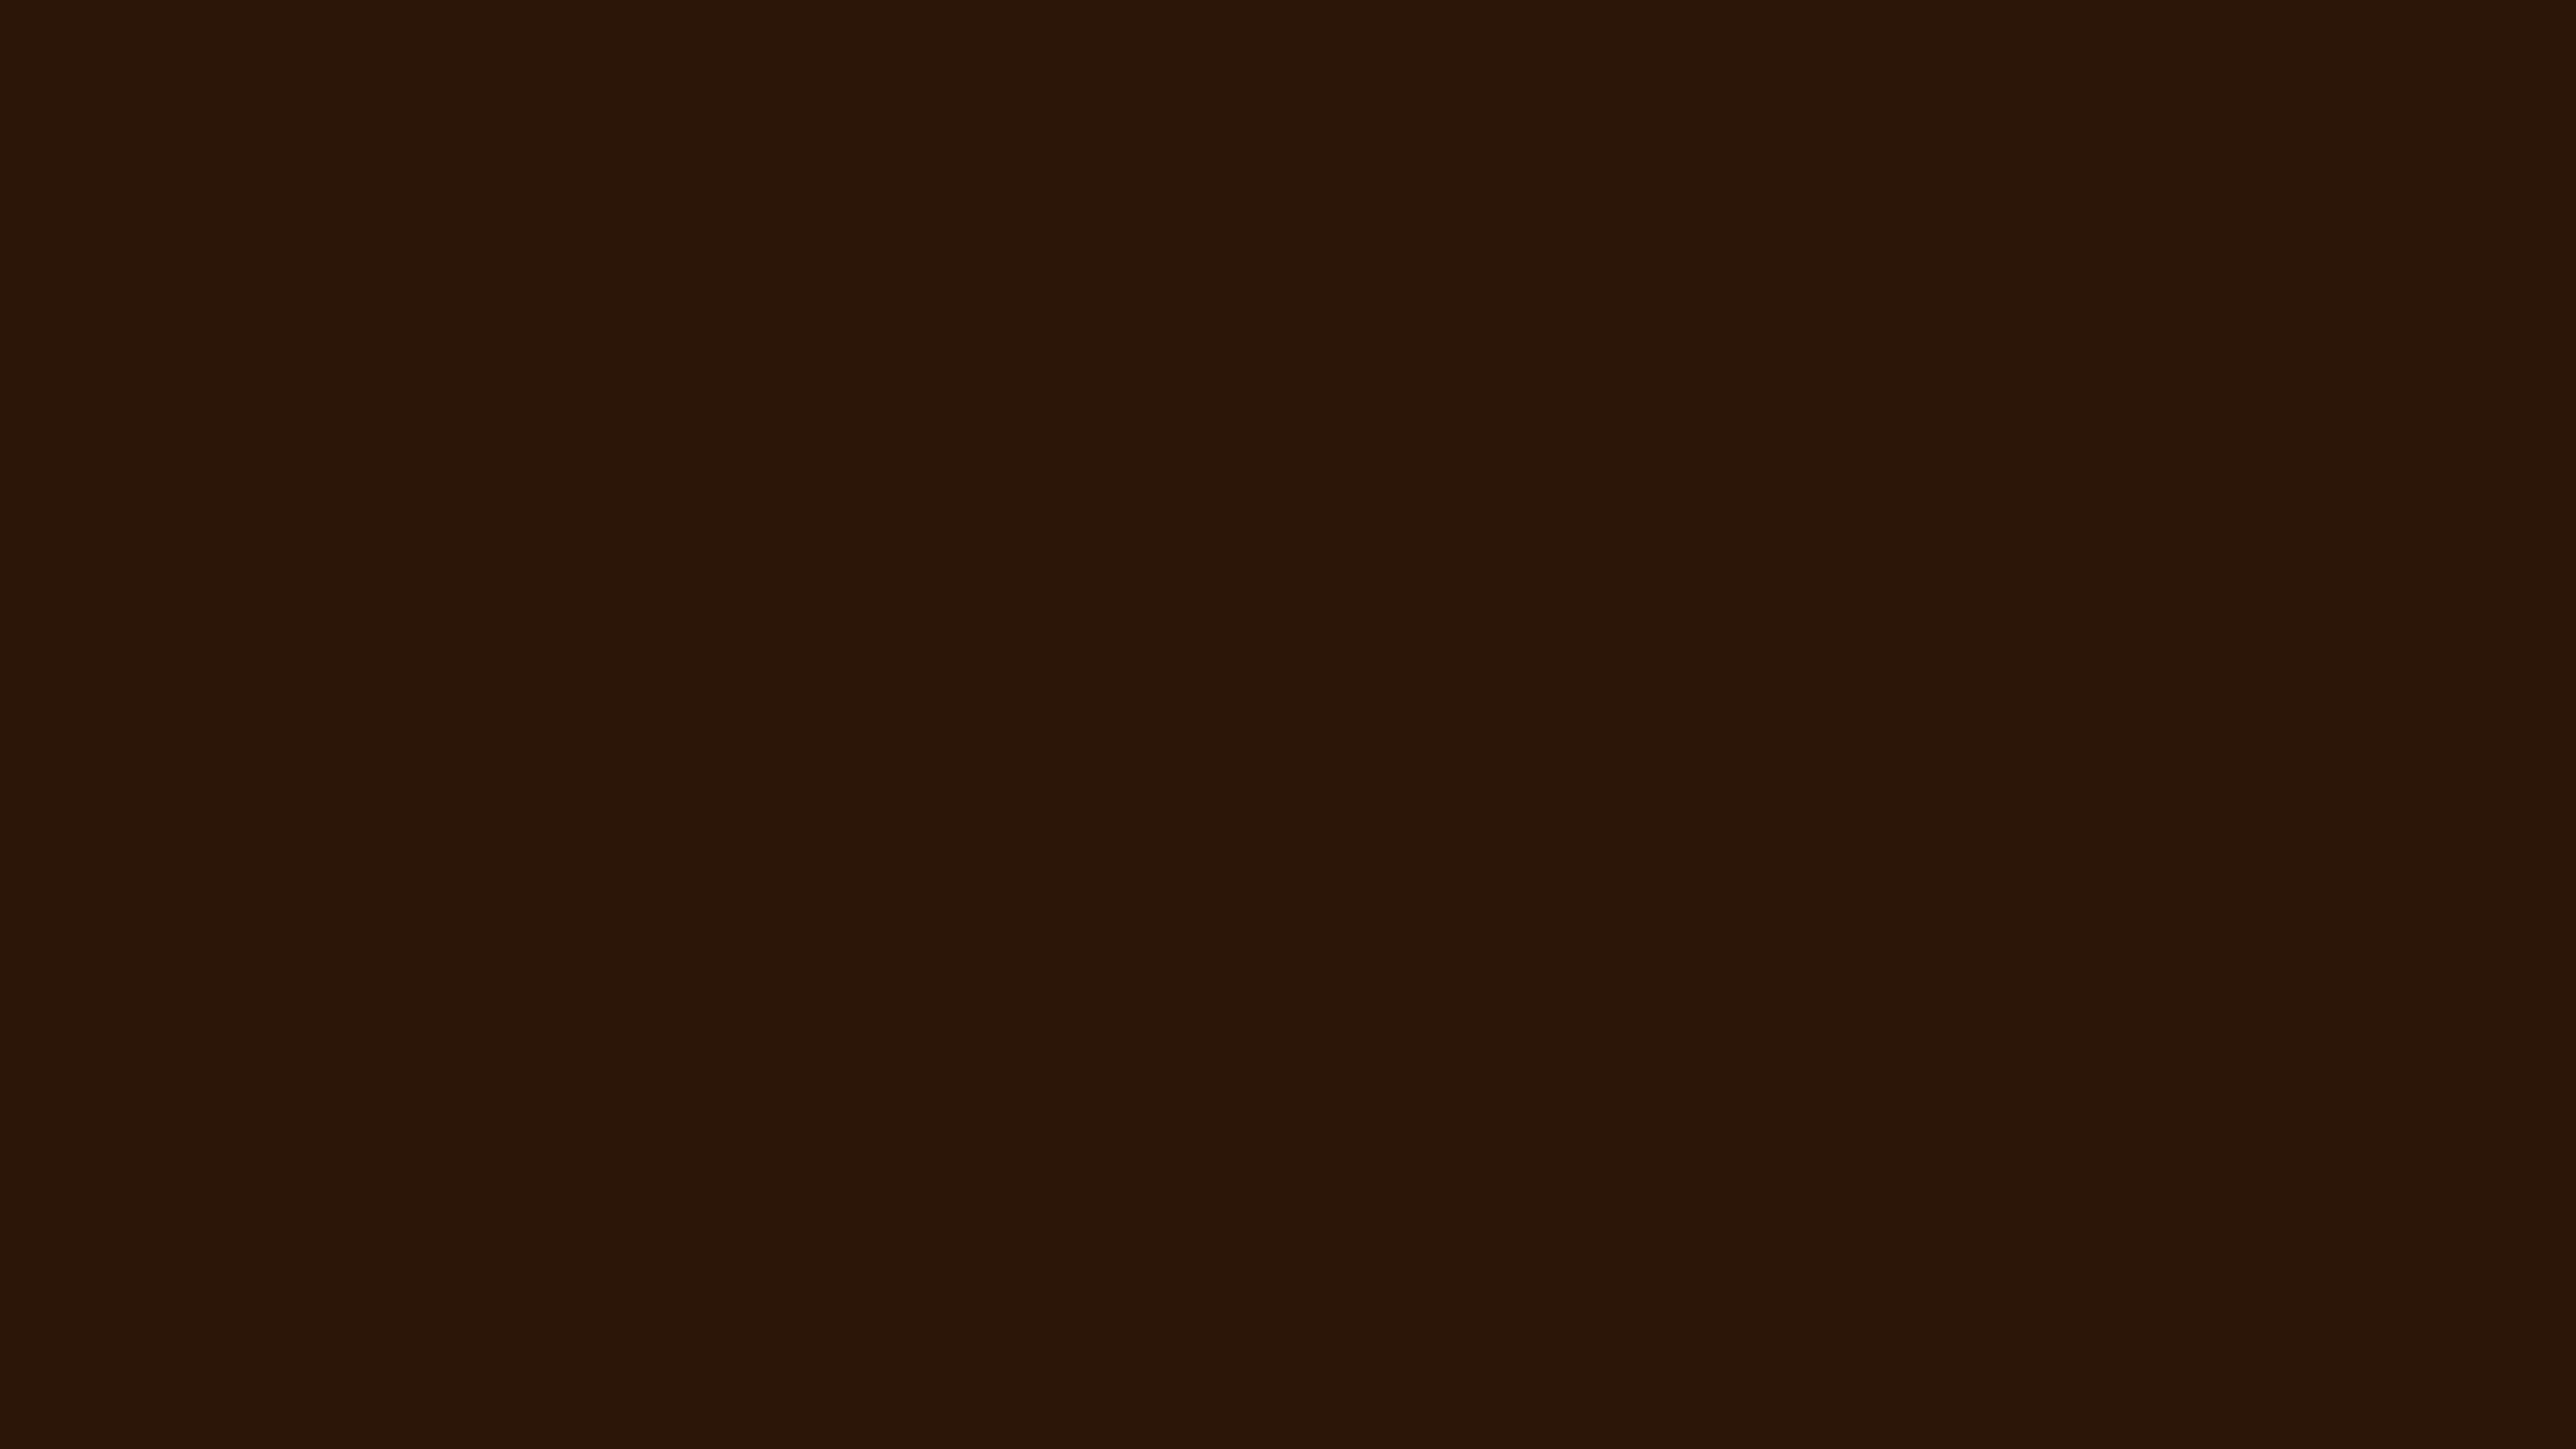 7680x4320 Zinnwaldite Brown Solid Color Background